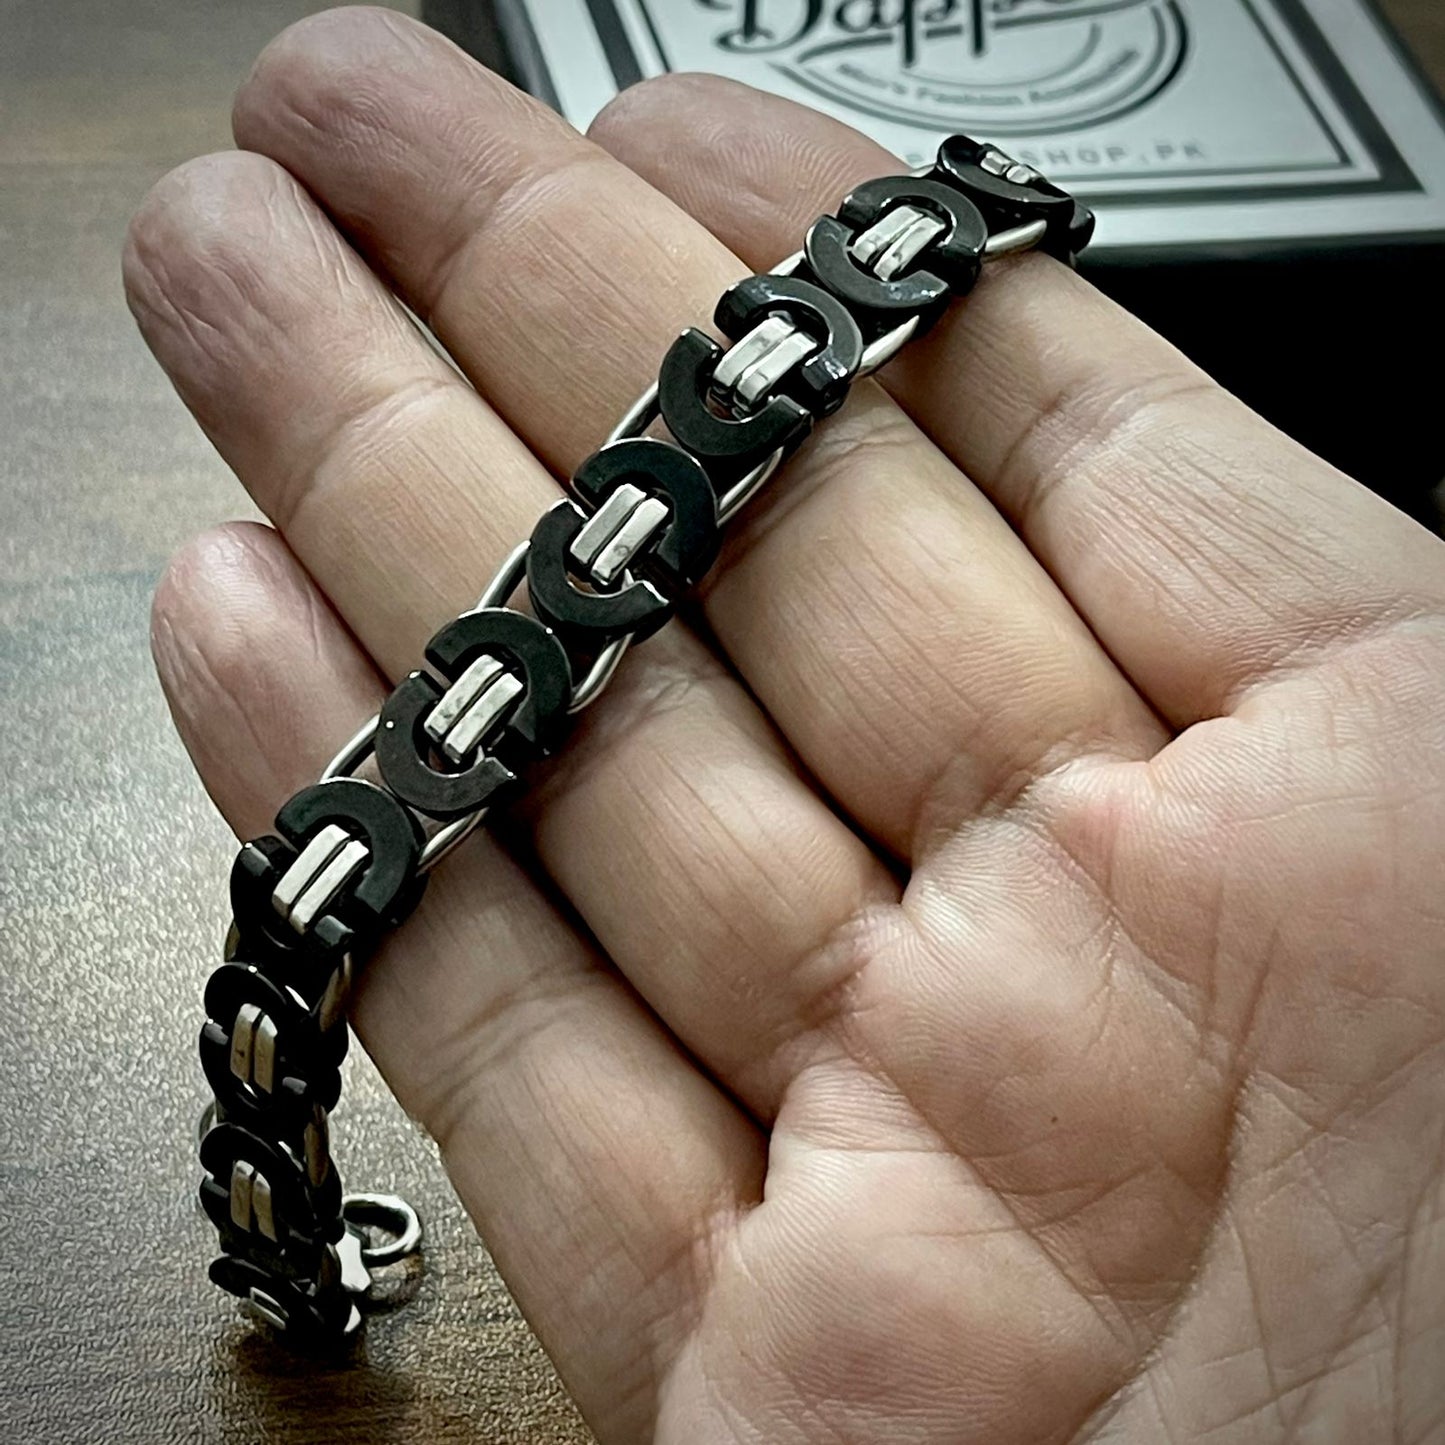 black and silver chain bracelet for men online in pakistan